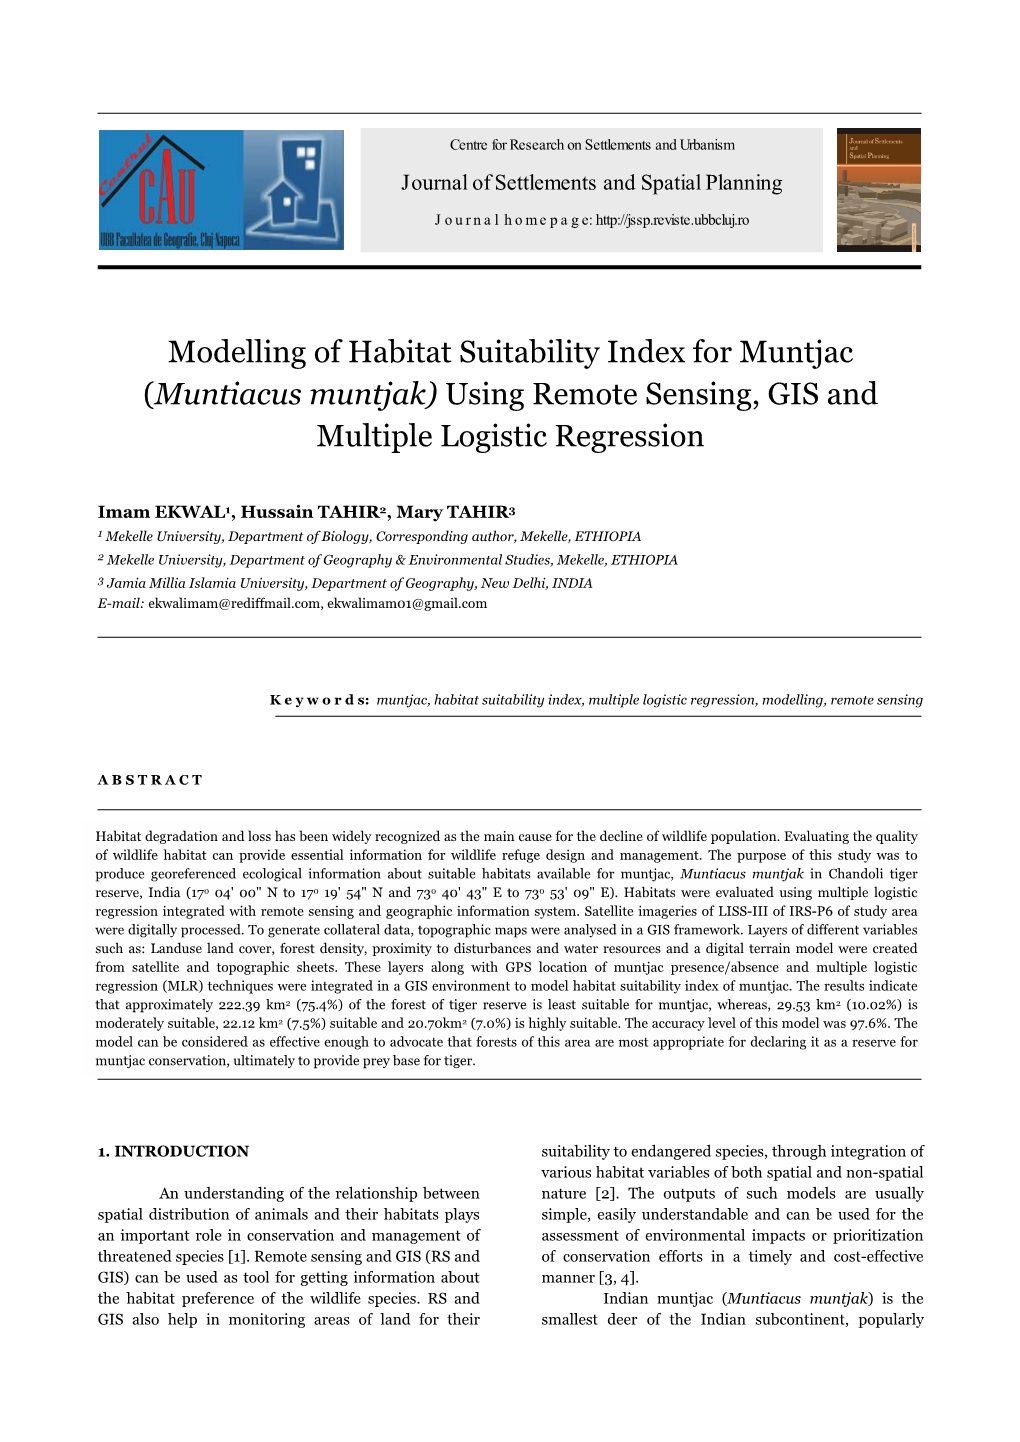 Modelling of Habitat Suitability Index for Muntjac (Muntiacus Muntjak) Using Remote Sensing, GIS and Multiple Logistic Regression